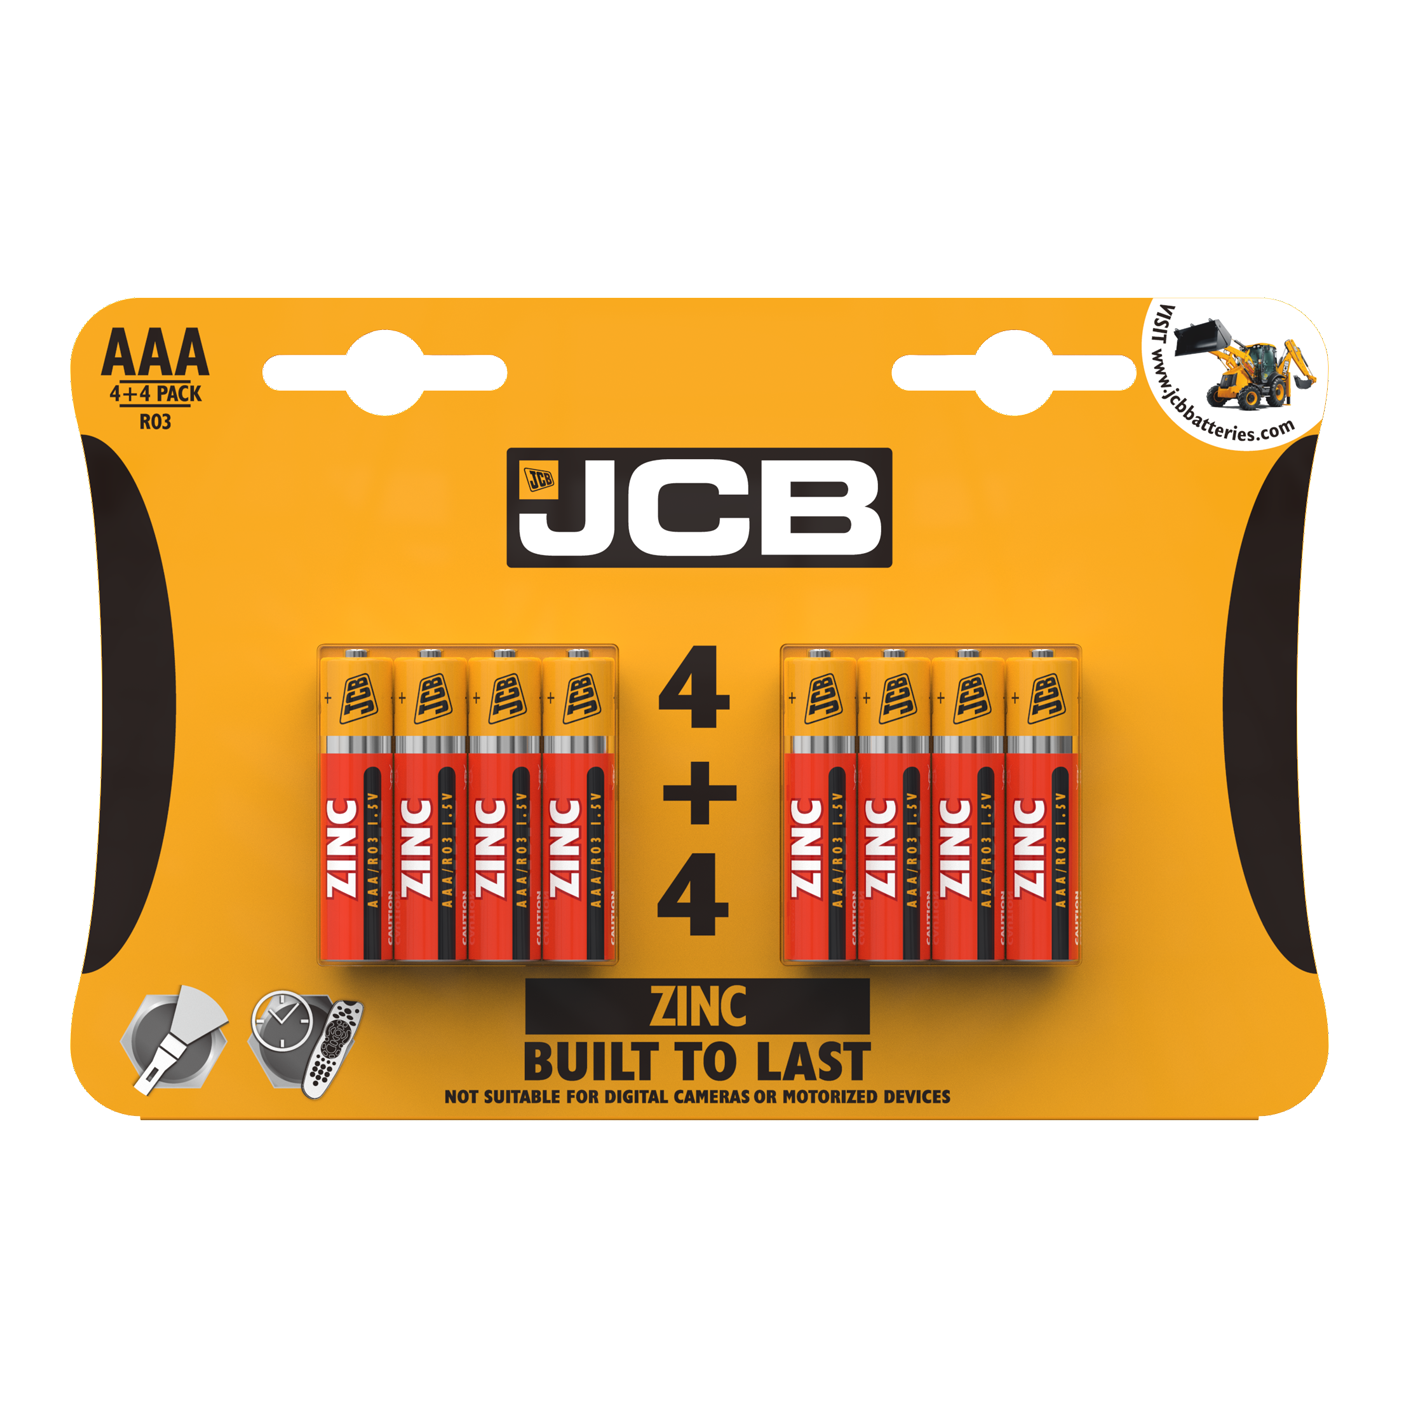 JCB AAA Zinc Batteries, Pack of 4+4